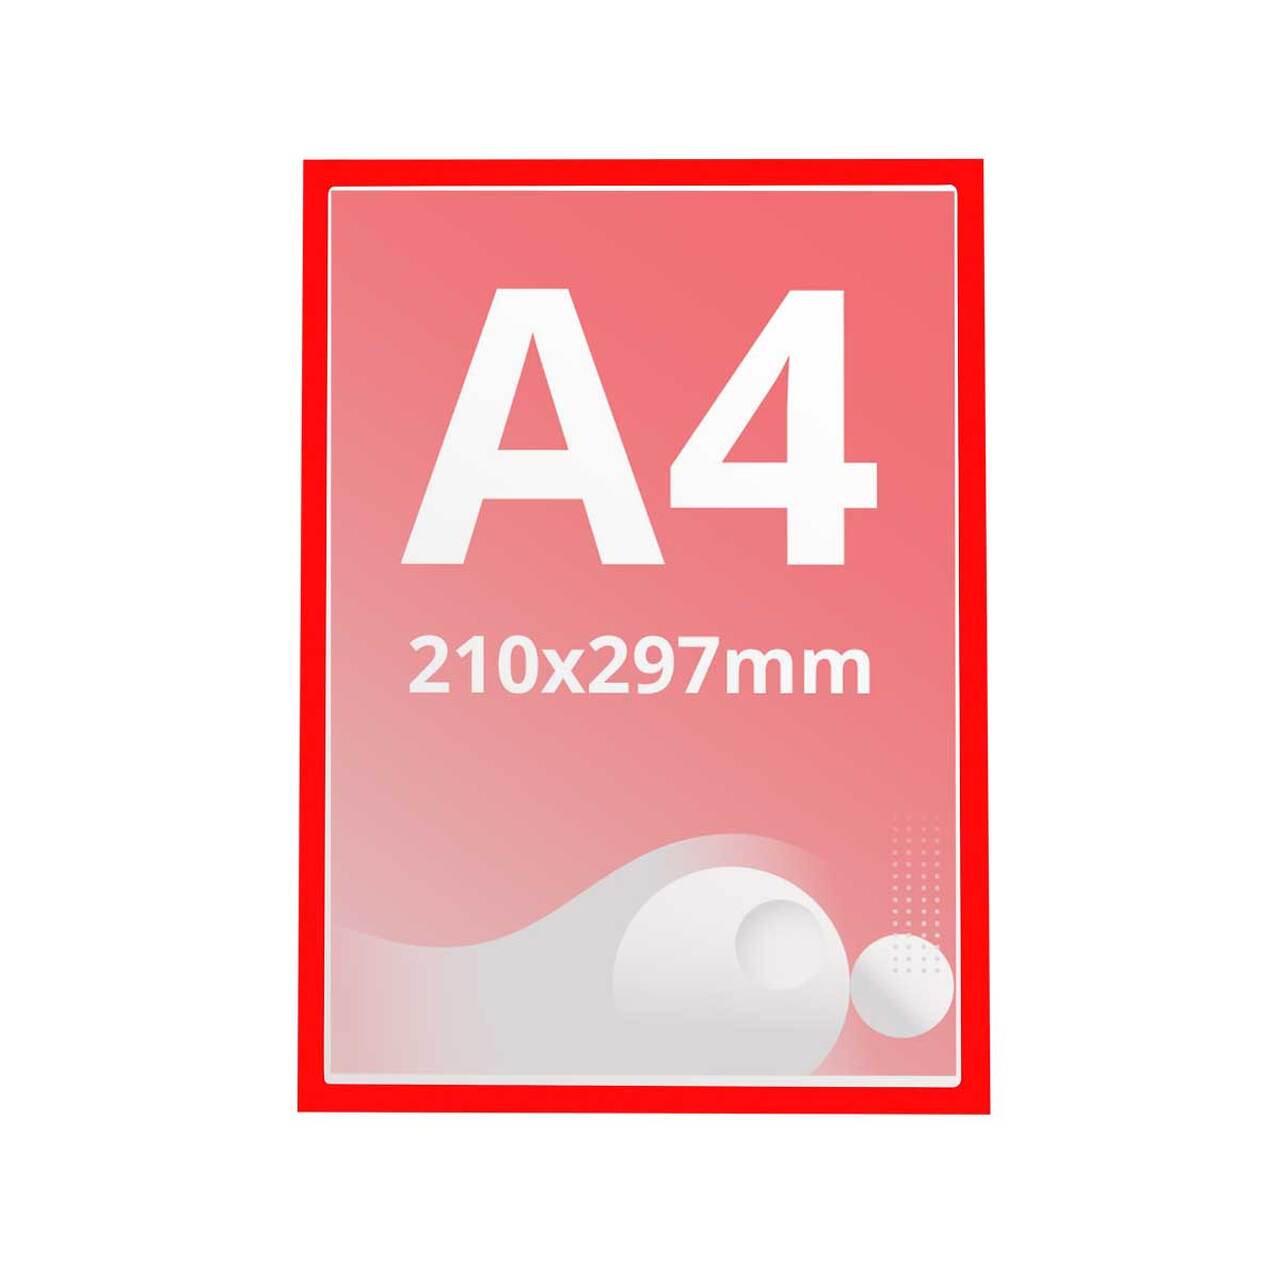  ​ Insert/ Suport magnetic pentru afișe, format A4( 210x297mm), roșu, 5buc/set.